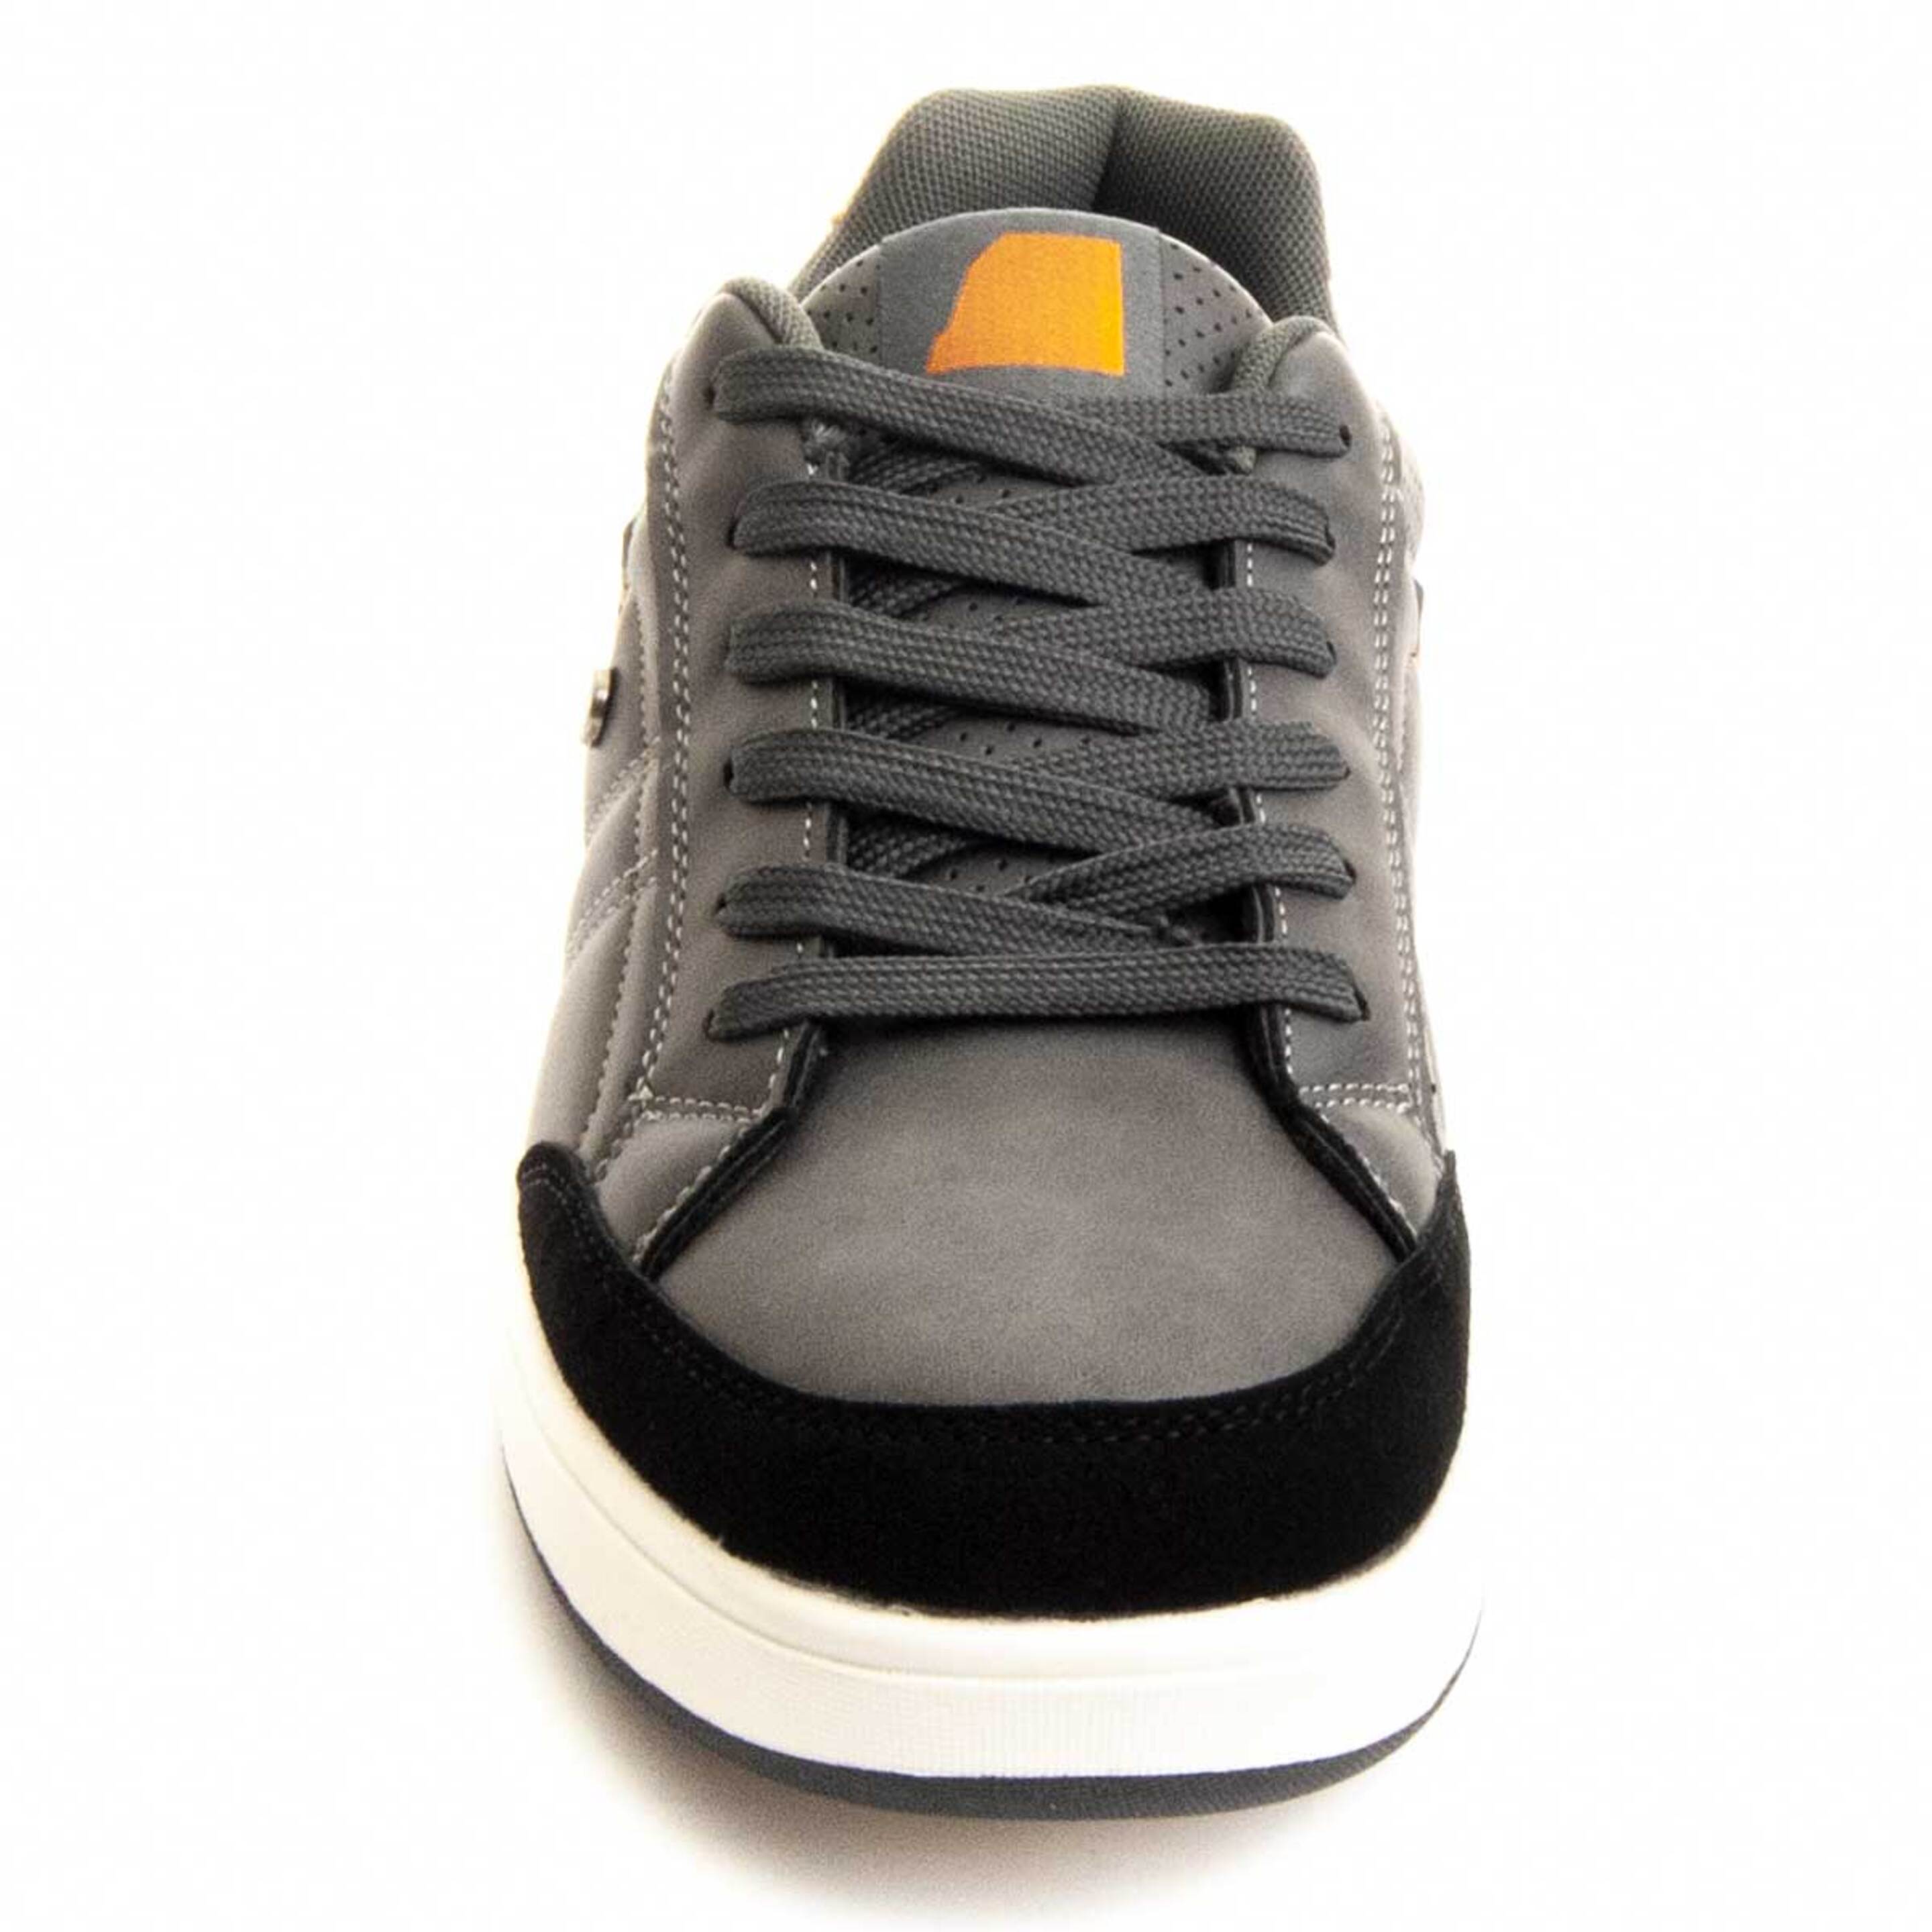 Montevita Sports Sneaker8 Casual - Cinzento - Tênis casual para homens. | Sport Zone MKP